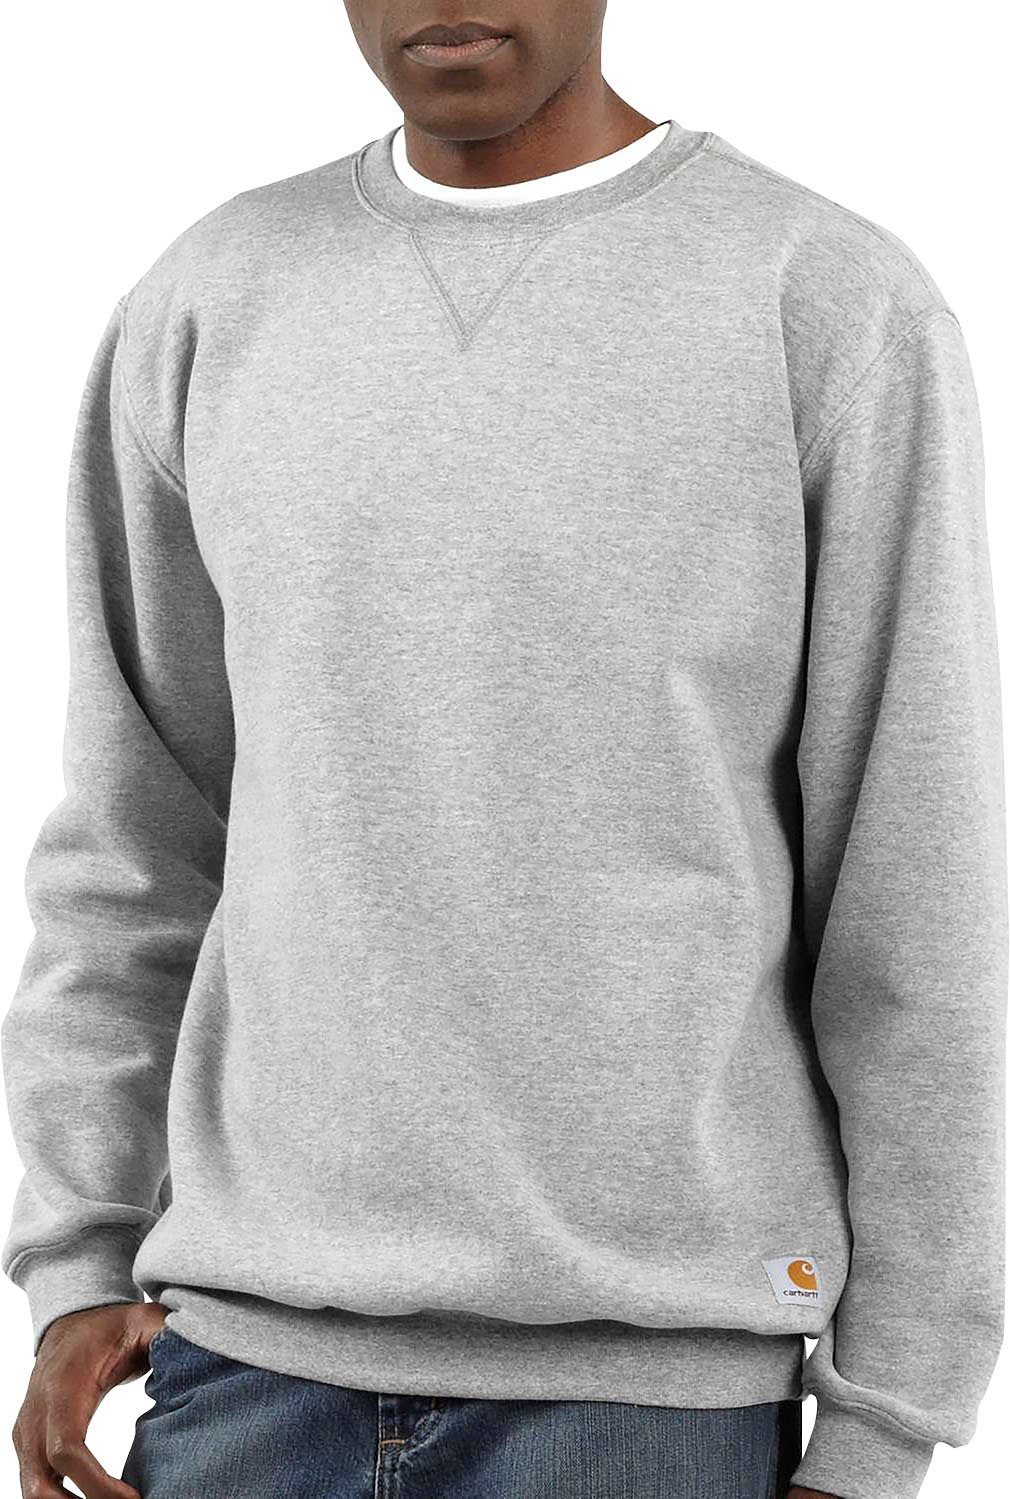 Carhartt Sweatshirt K124 hellgrau